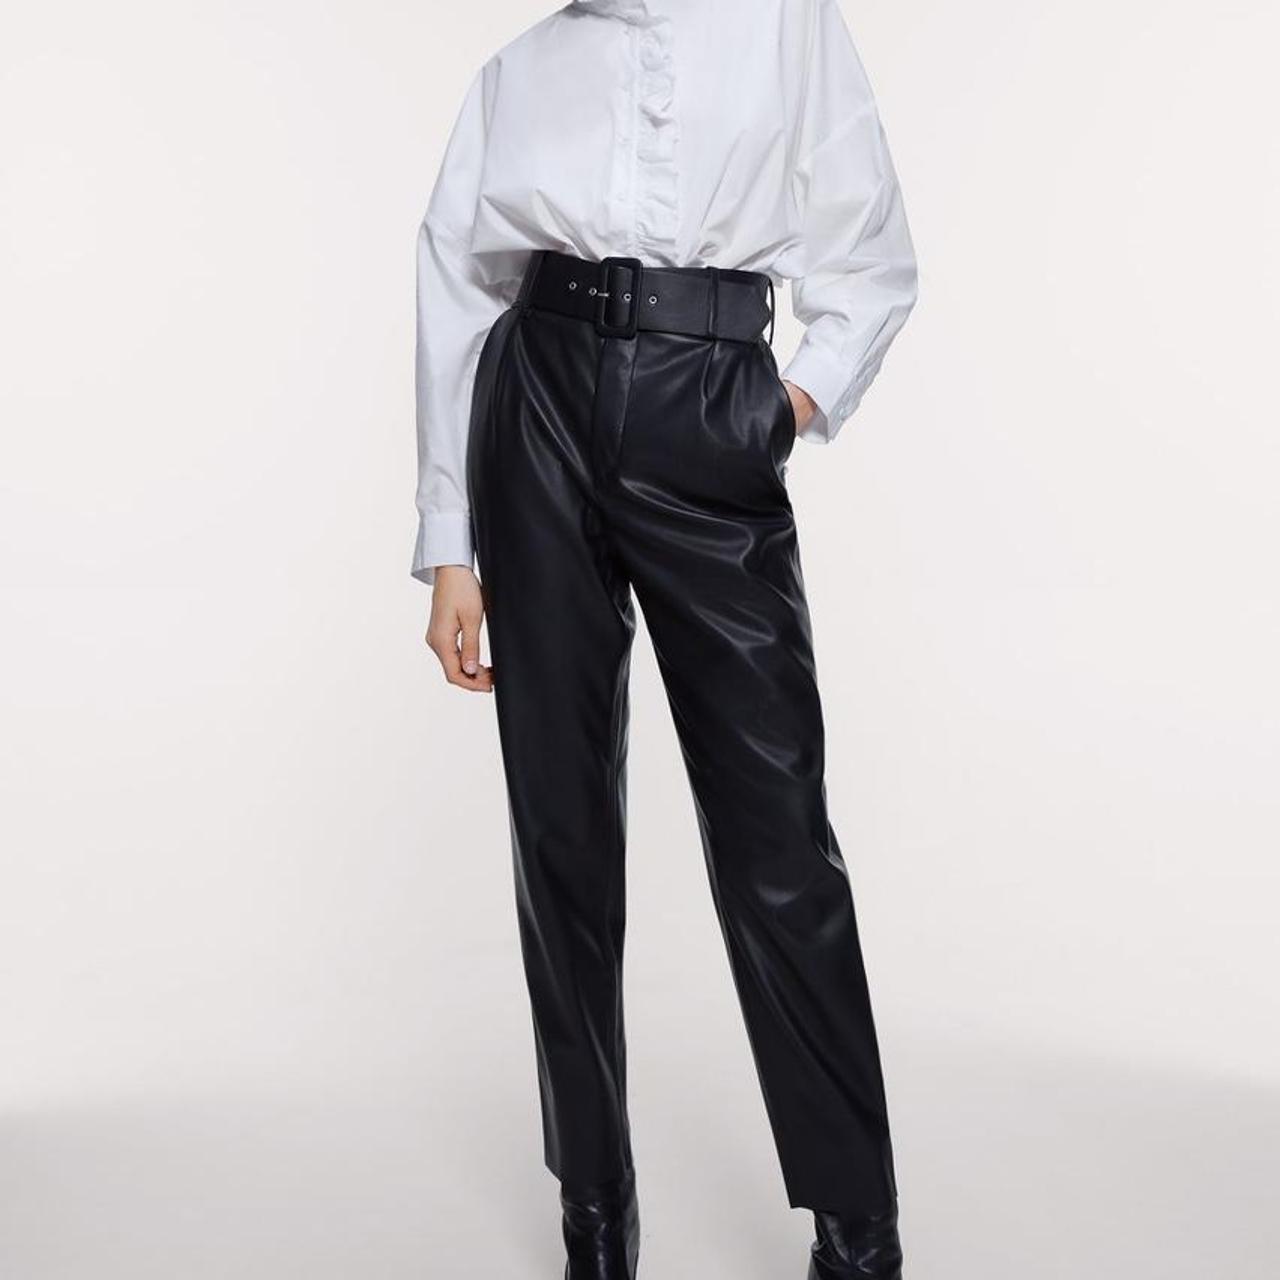 Zara trf 'extra long' faux leather trousers, size XS - Depop